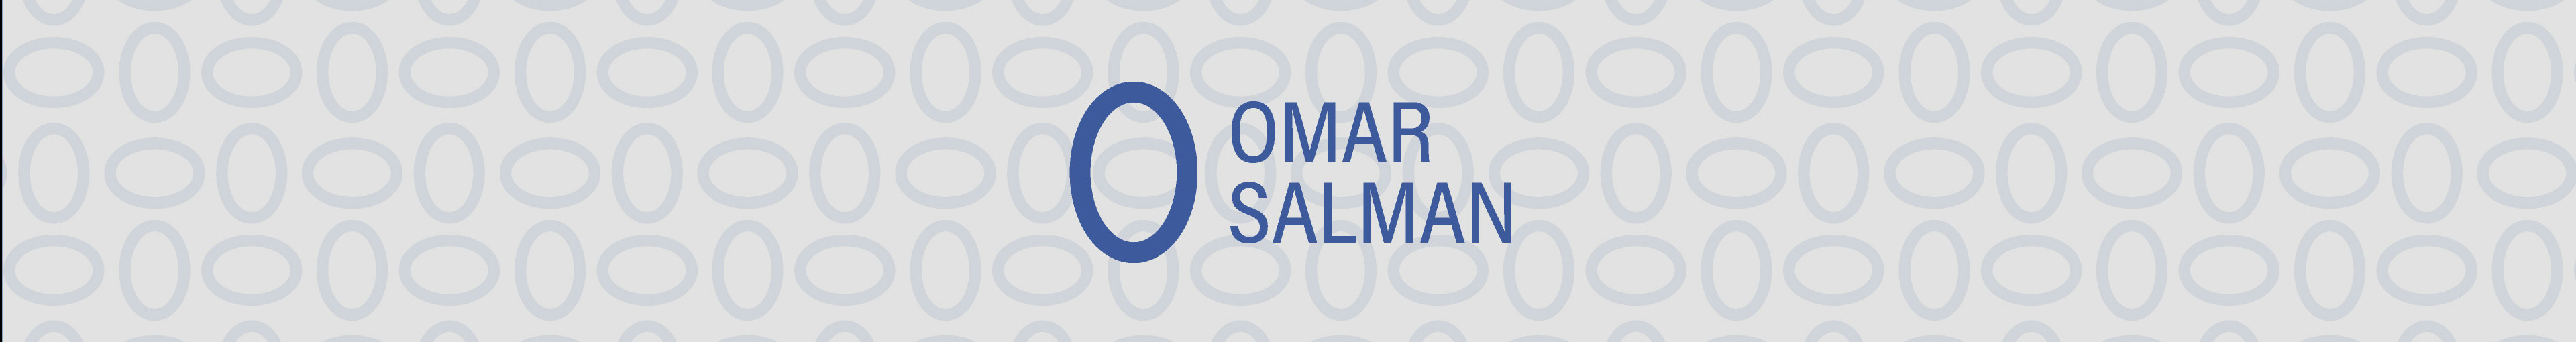 Omar Salman's profile banner